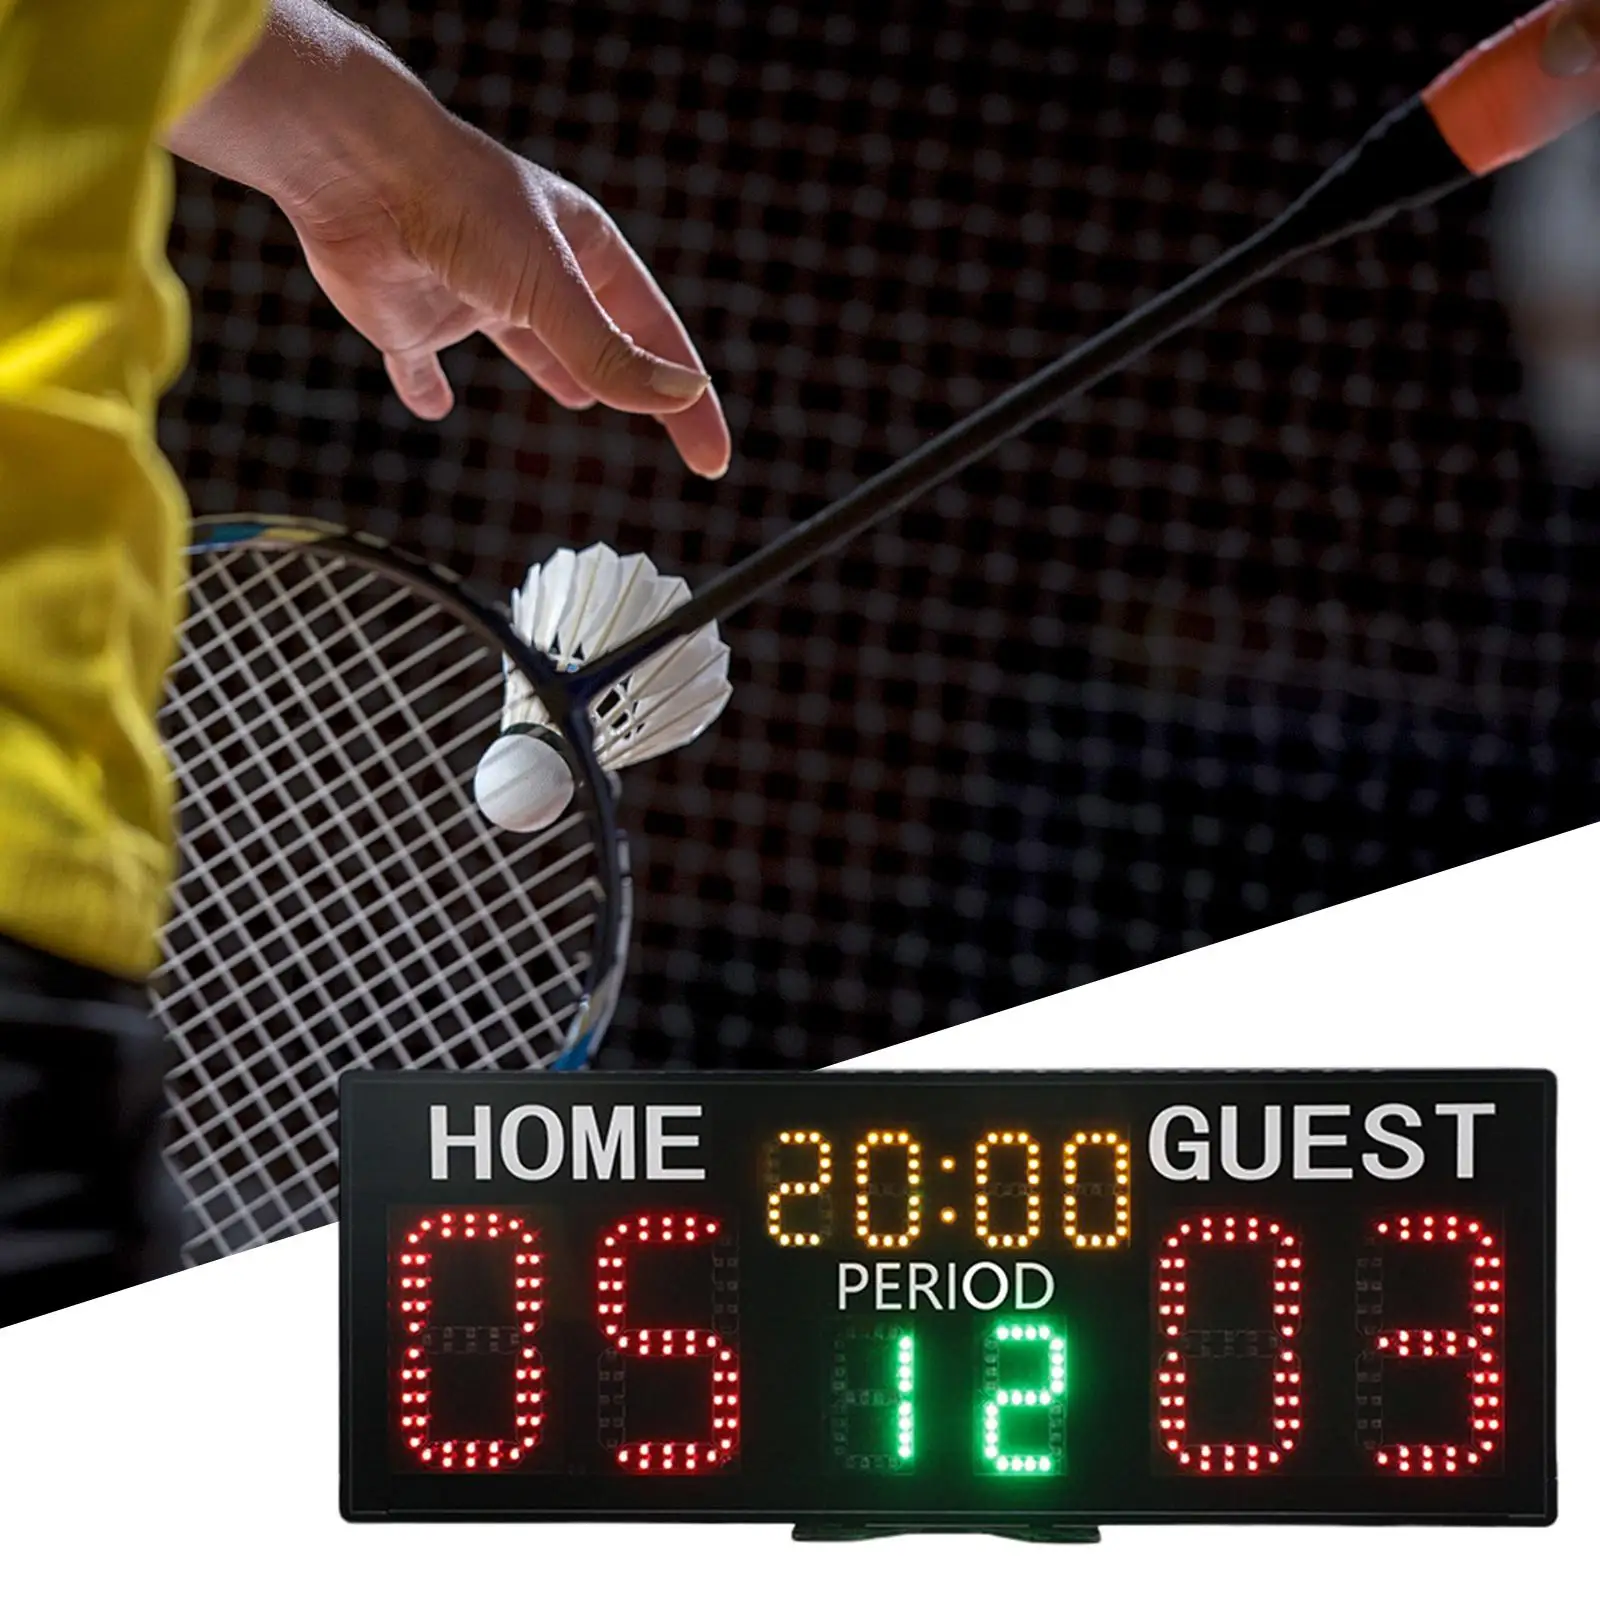 Tennis Score Keeper Countdown Timer & Score Tabletop Electronic Scoreboard for Football Volleyball Softball Soccer Basketball